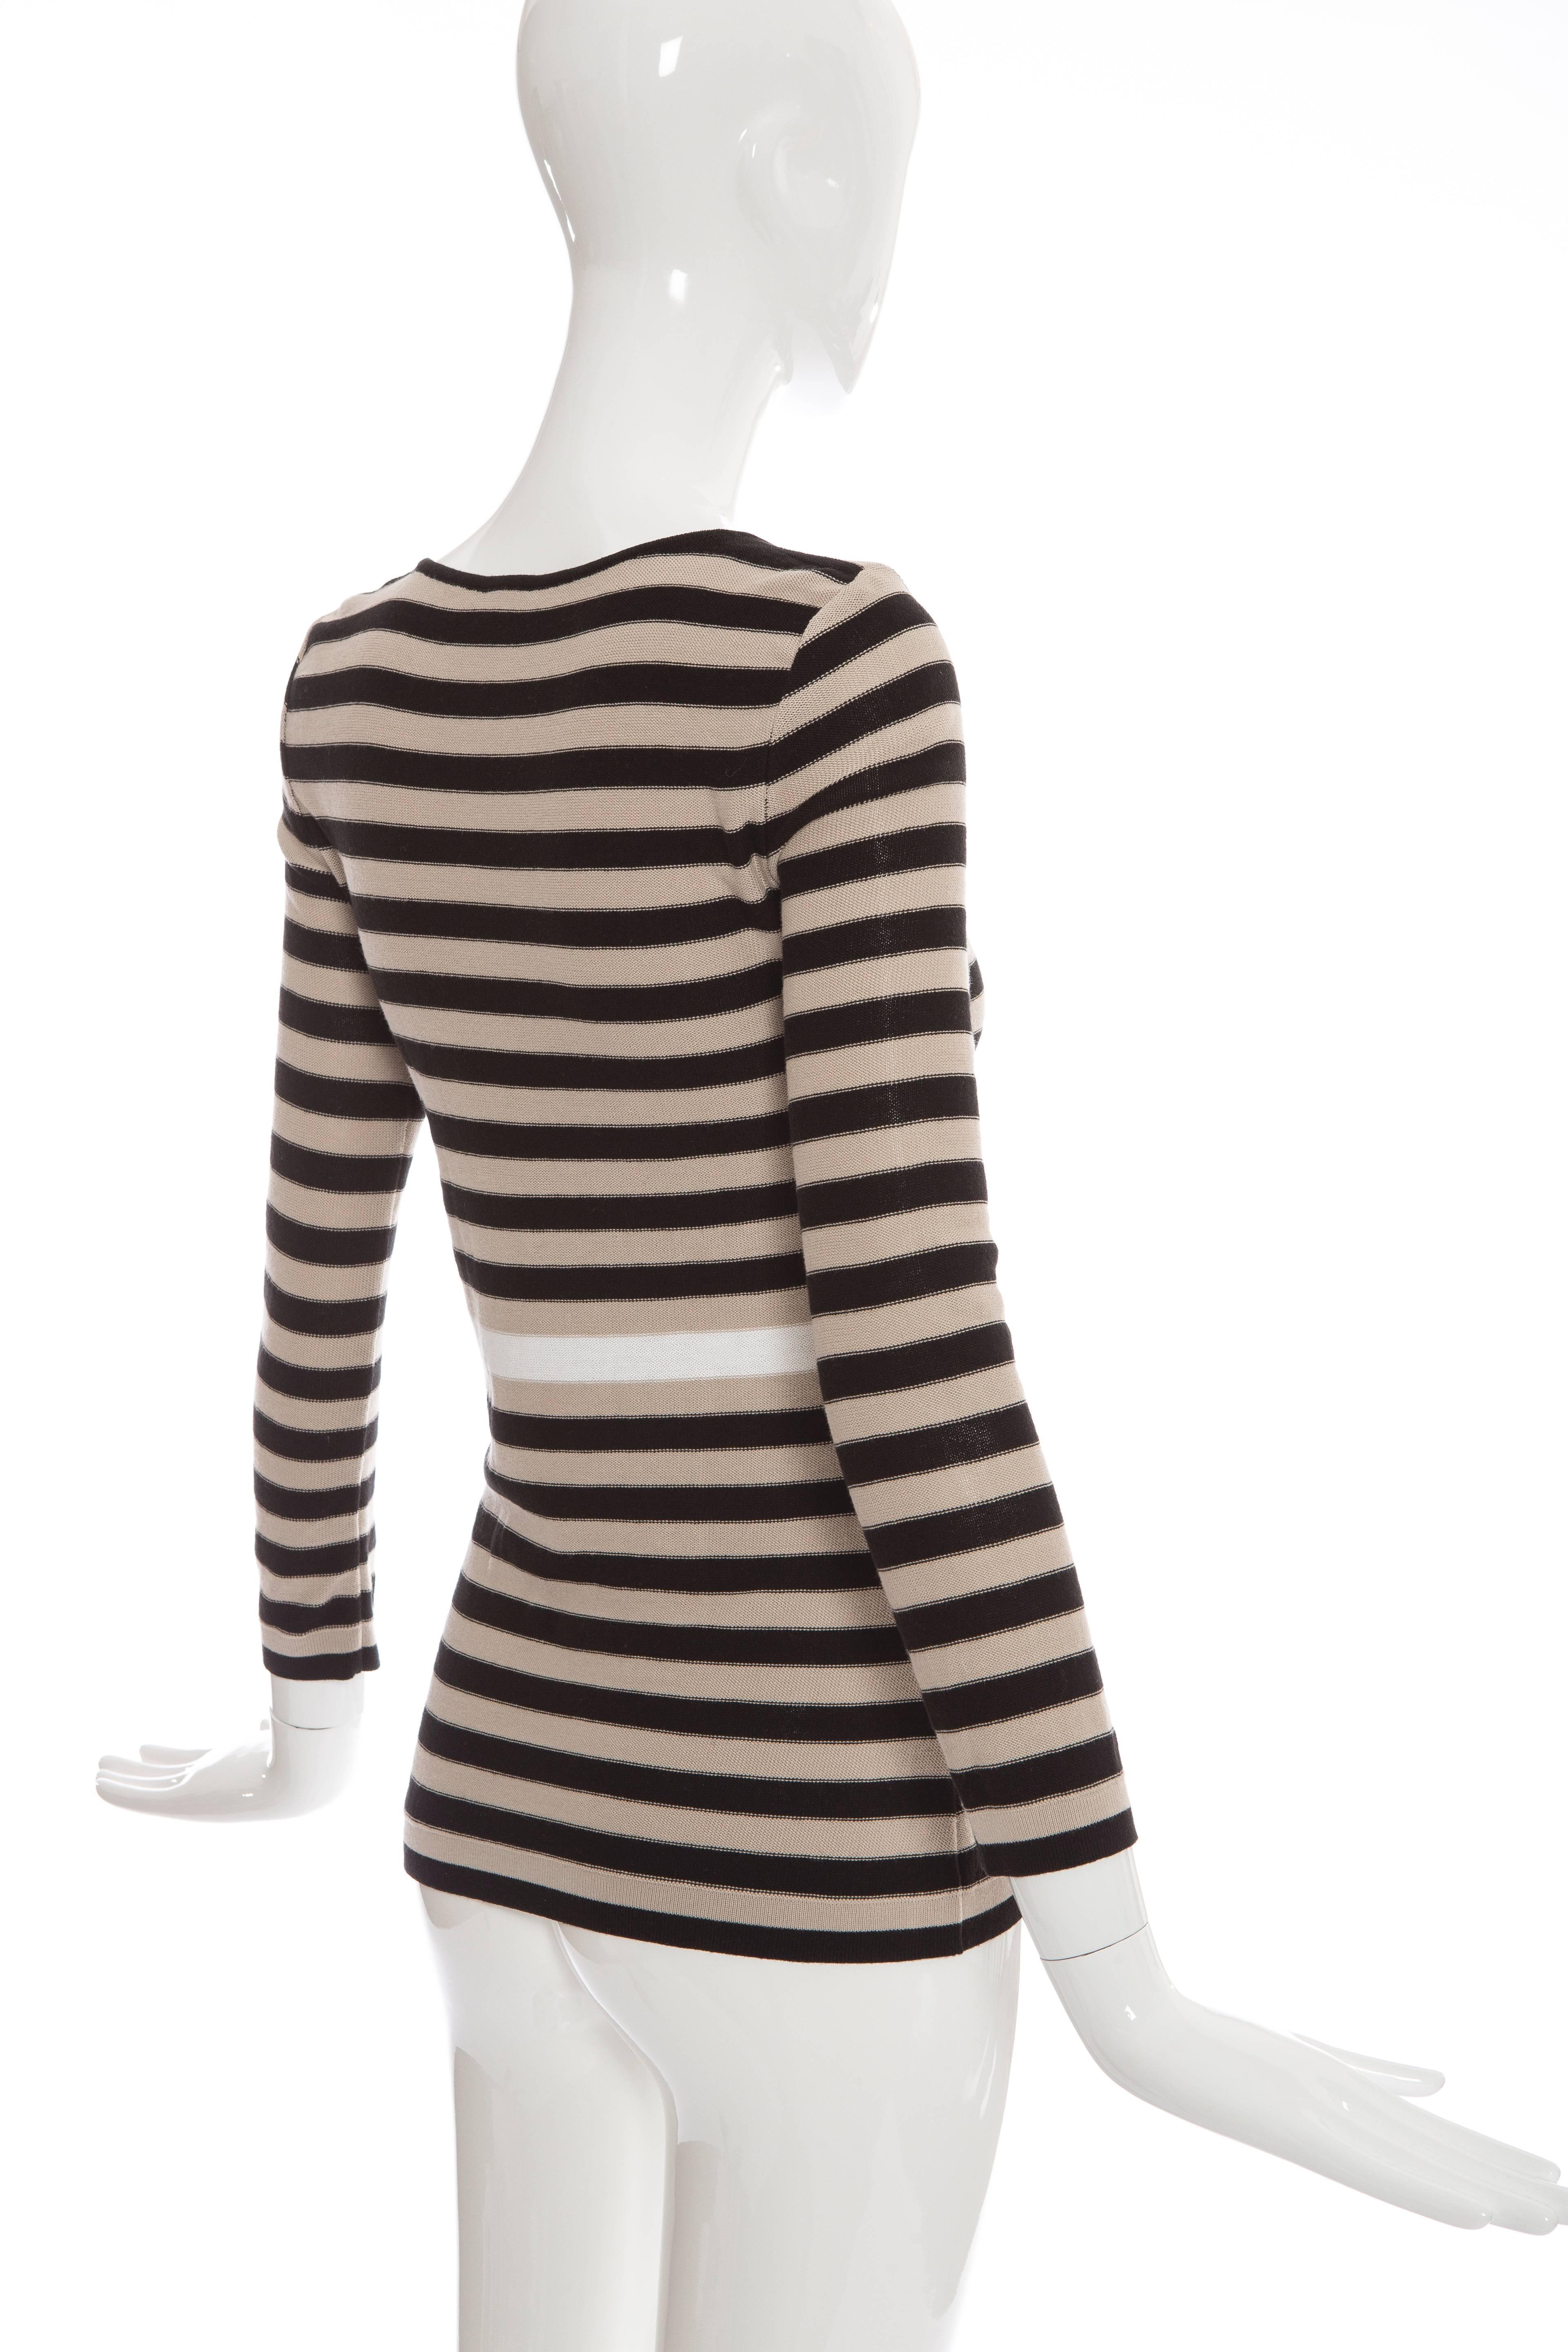 Sonia Rykiel Striped Cotton Knit Sweater, Spring - Summer 2002 2